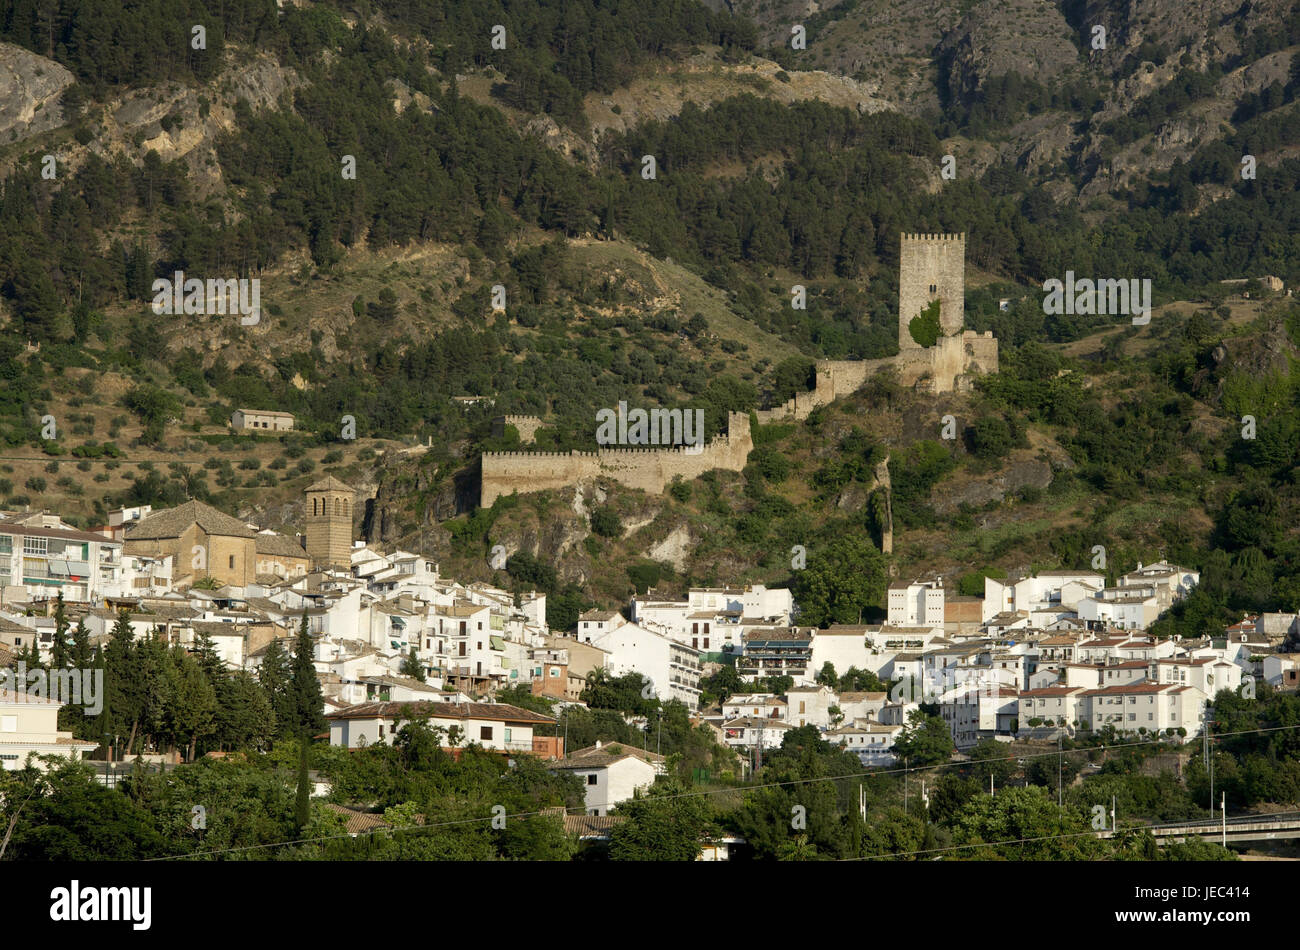 Spain, Andalusia, Sierra de Cazorla, town view with Castillo de la Yedra, Stock Photo